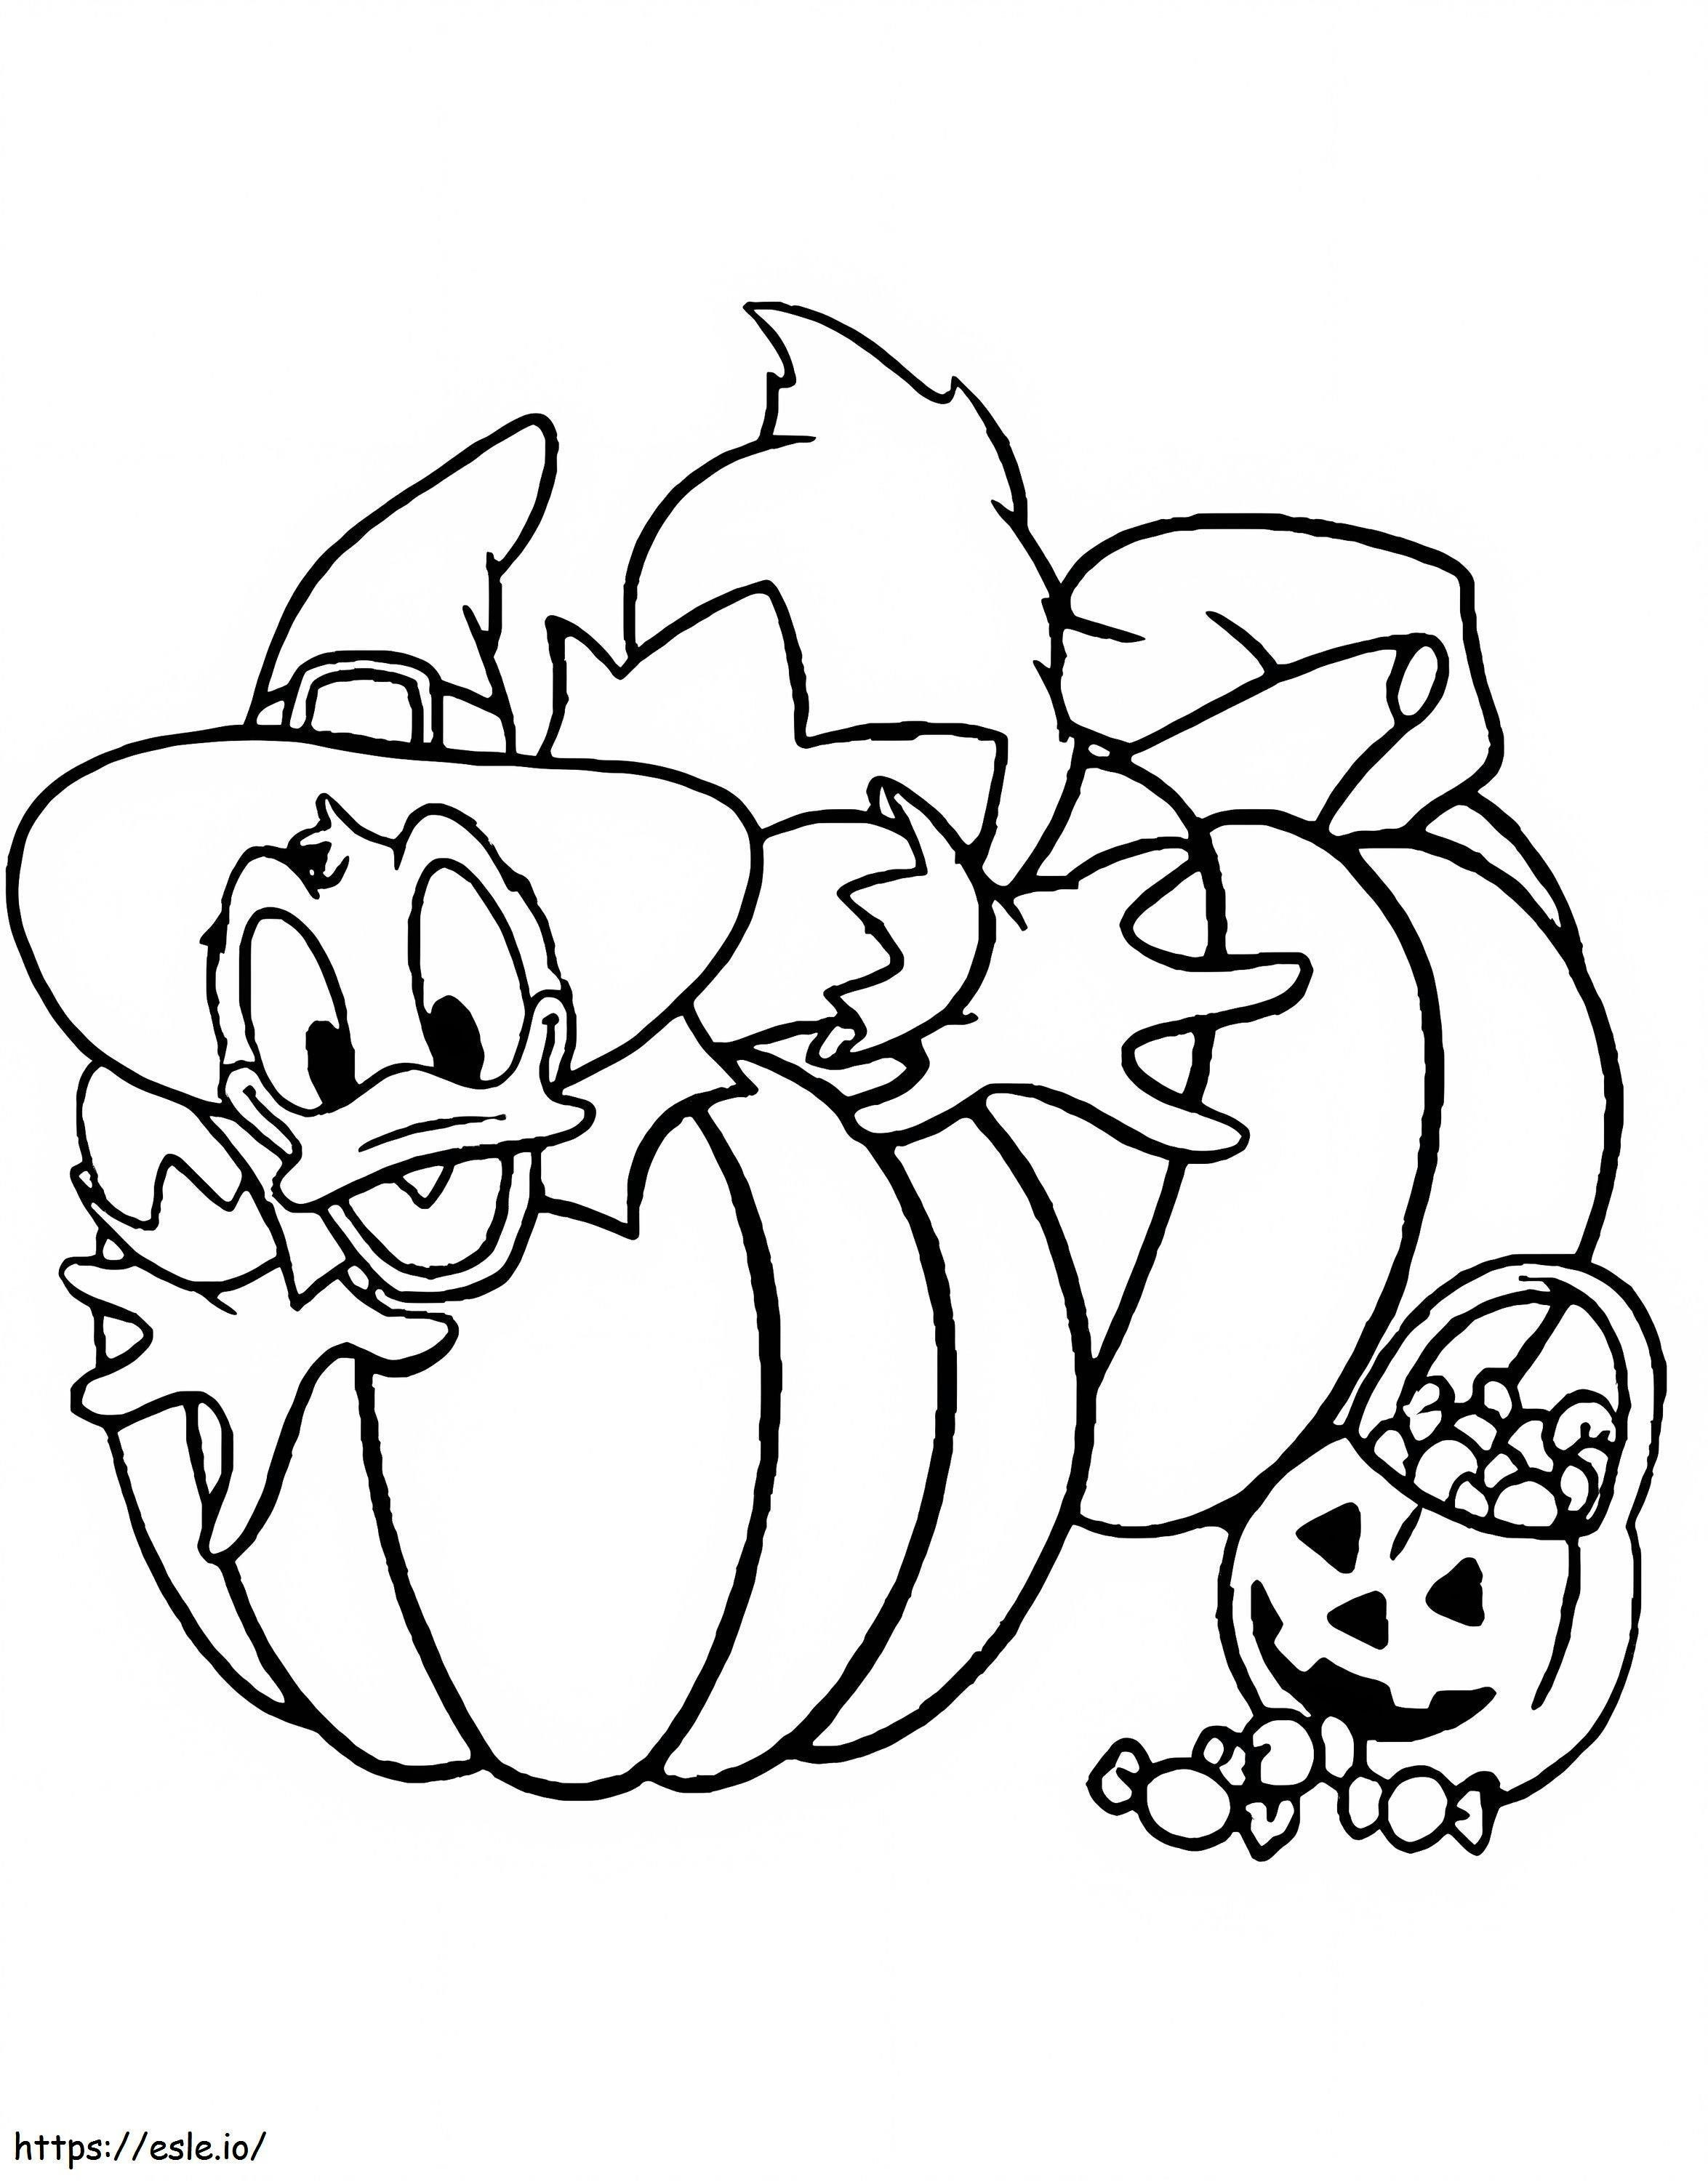 Pato Donald no Halloween para colorir